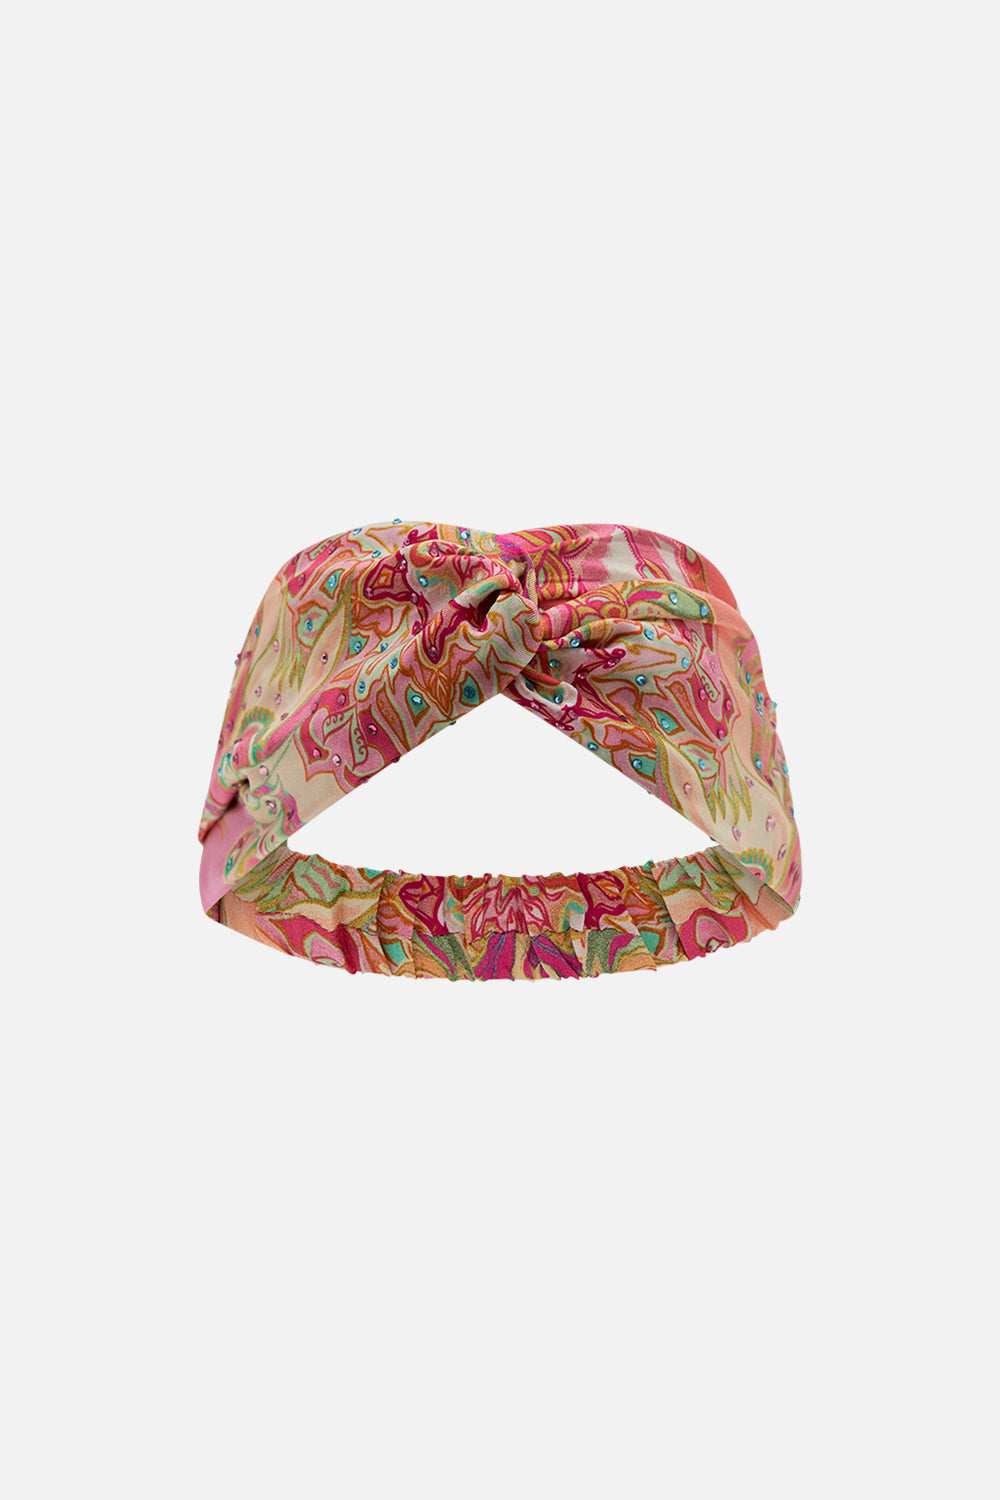 CAMILLA silk headband in Tea With Tuchinski print